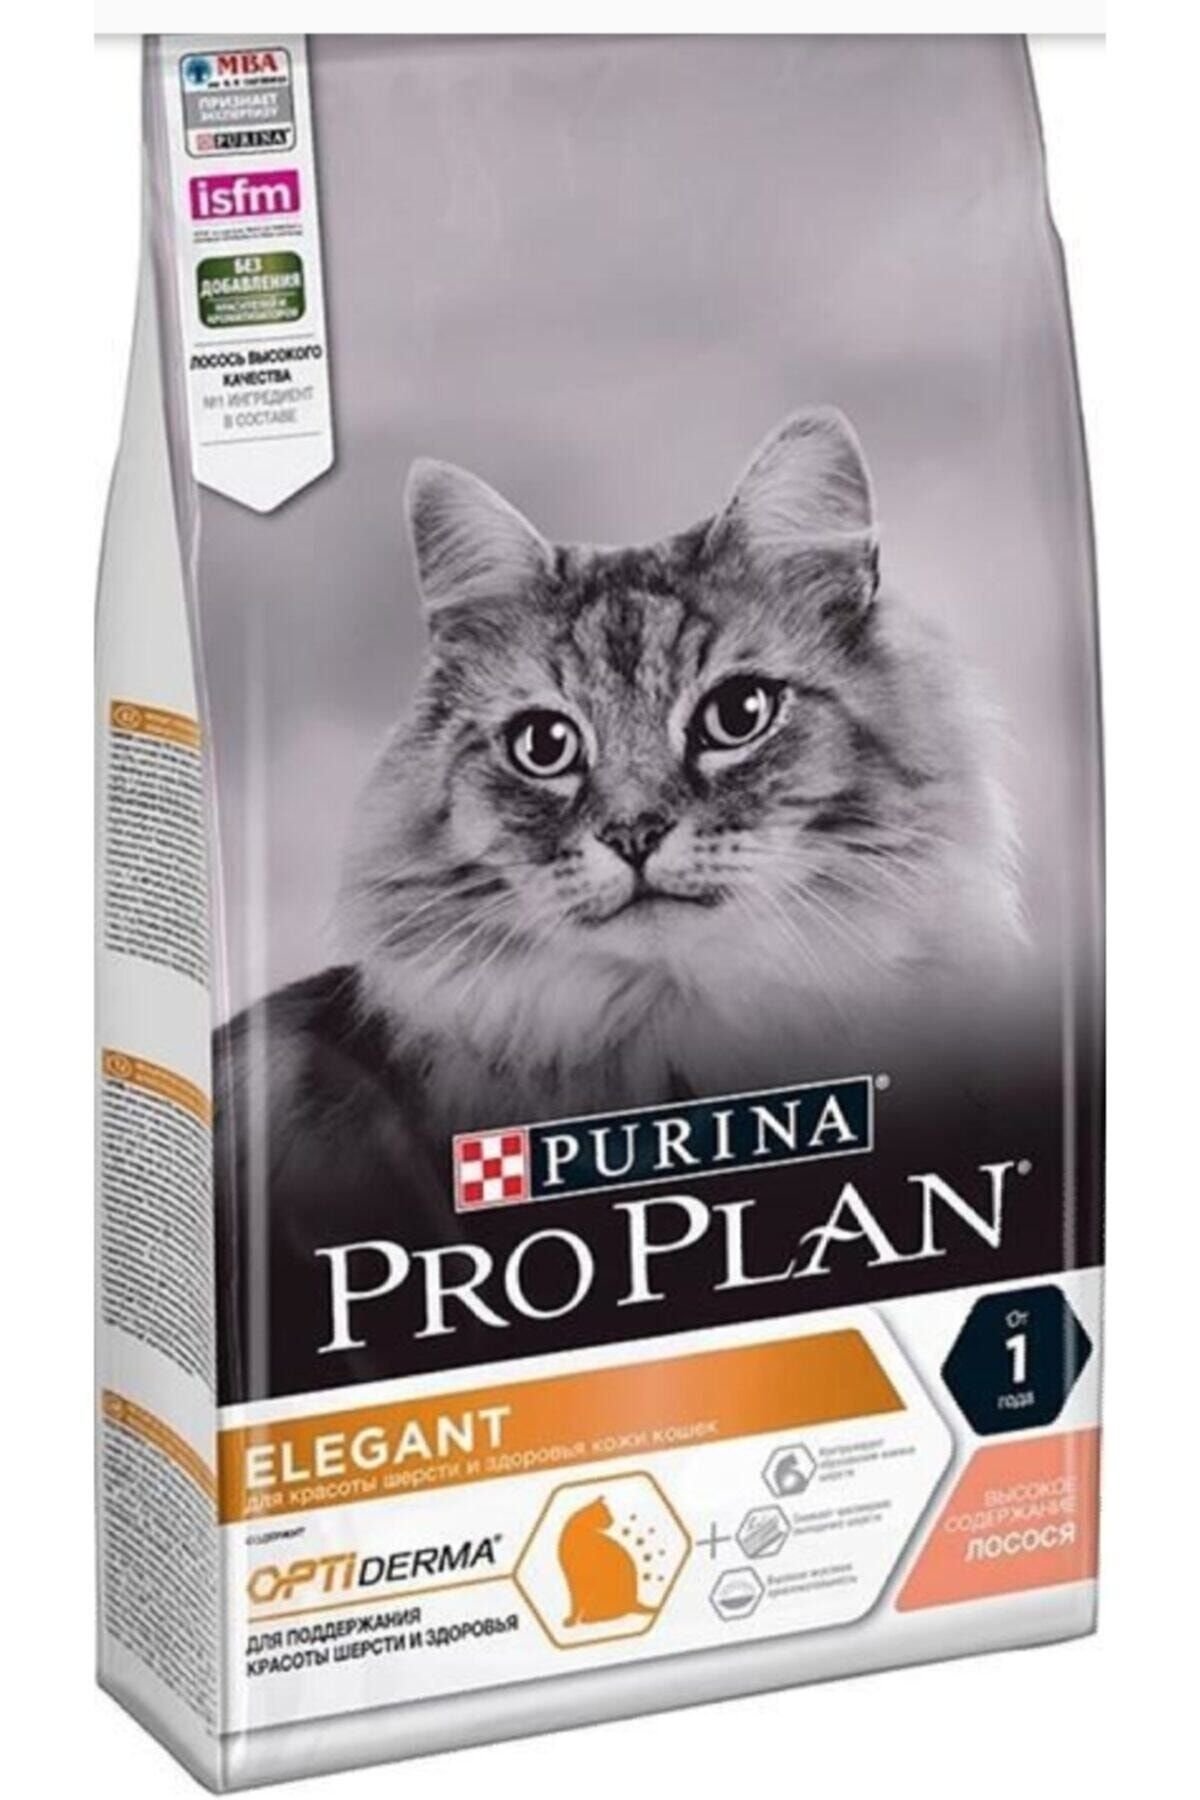 Pro Plan Pro Plan Elegant Opti Derma Somonlu Yetişkin Kedi Maması 10 KG